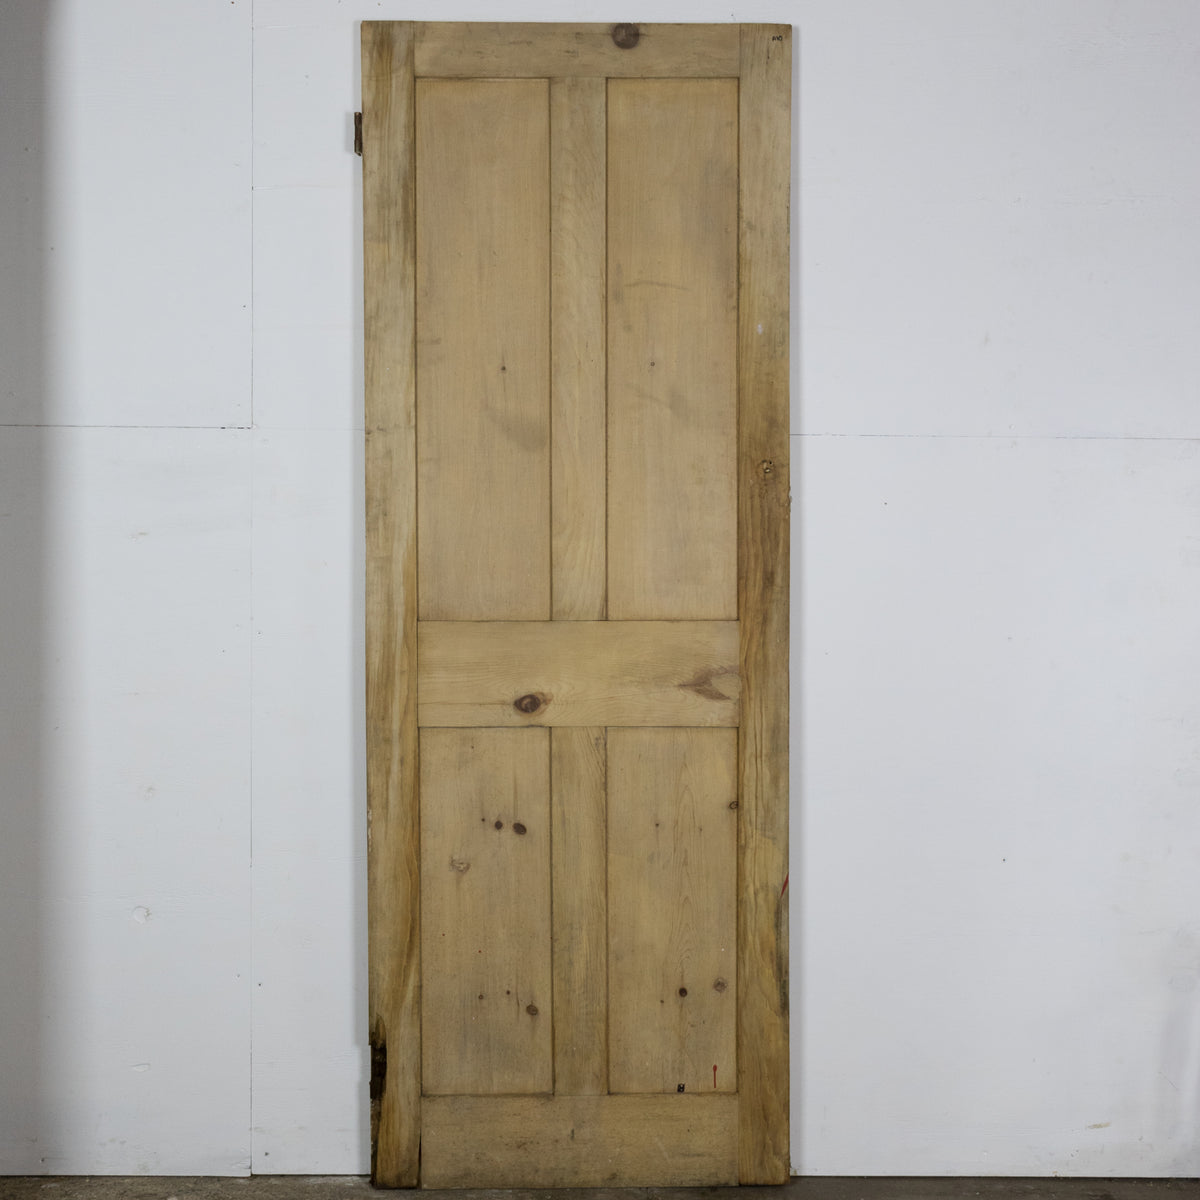 Antique Victorian 4 Panel Door - 185cm x 67cm | The Architectural Forum